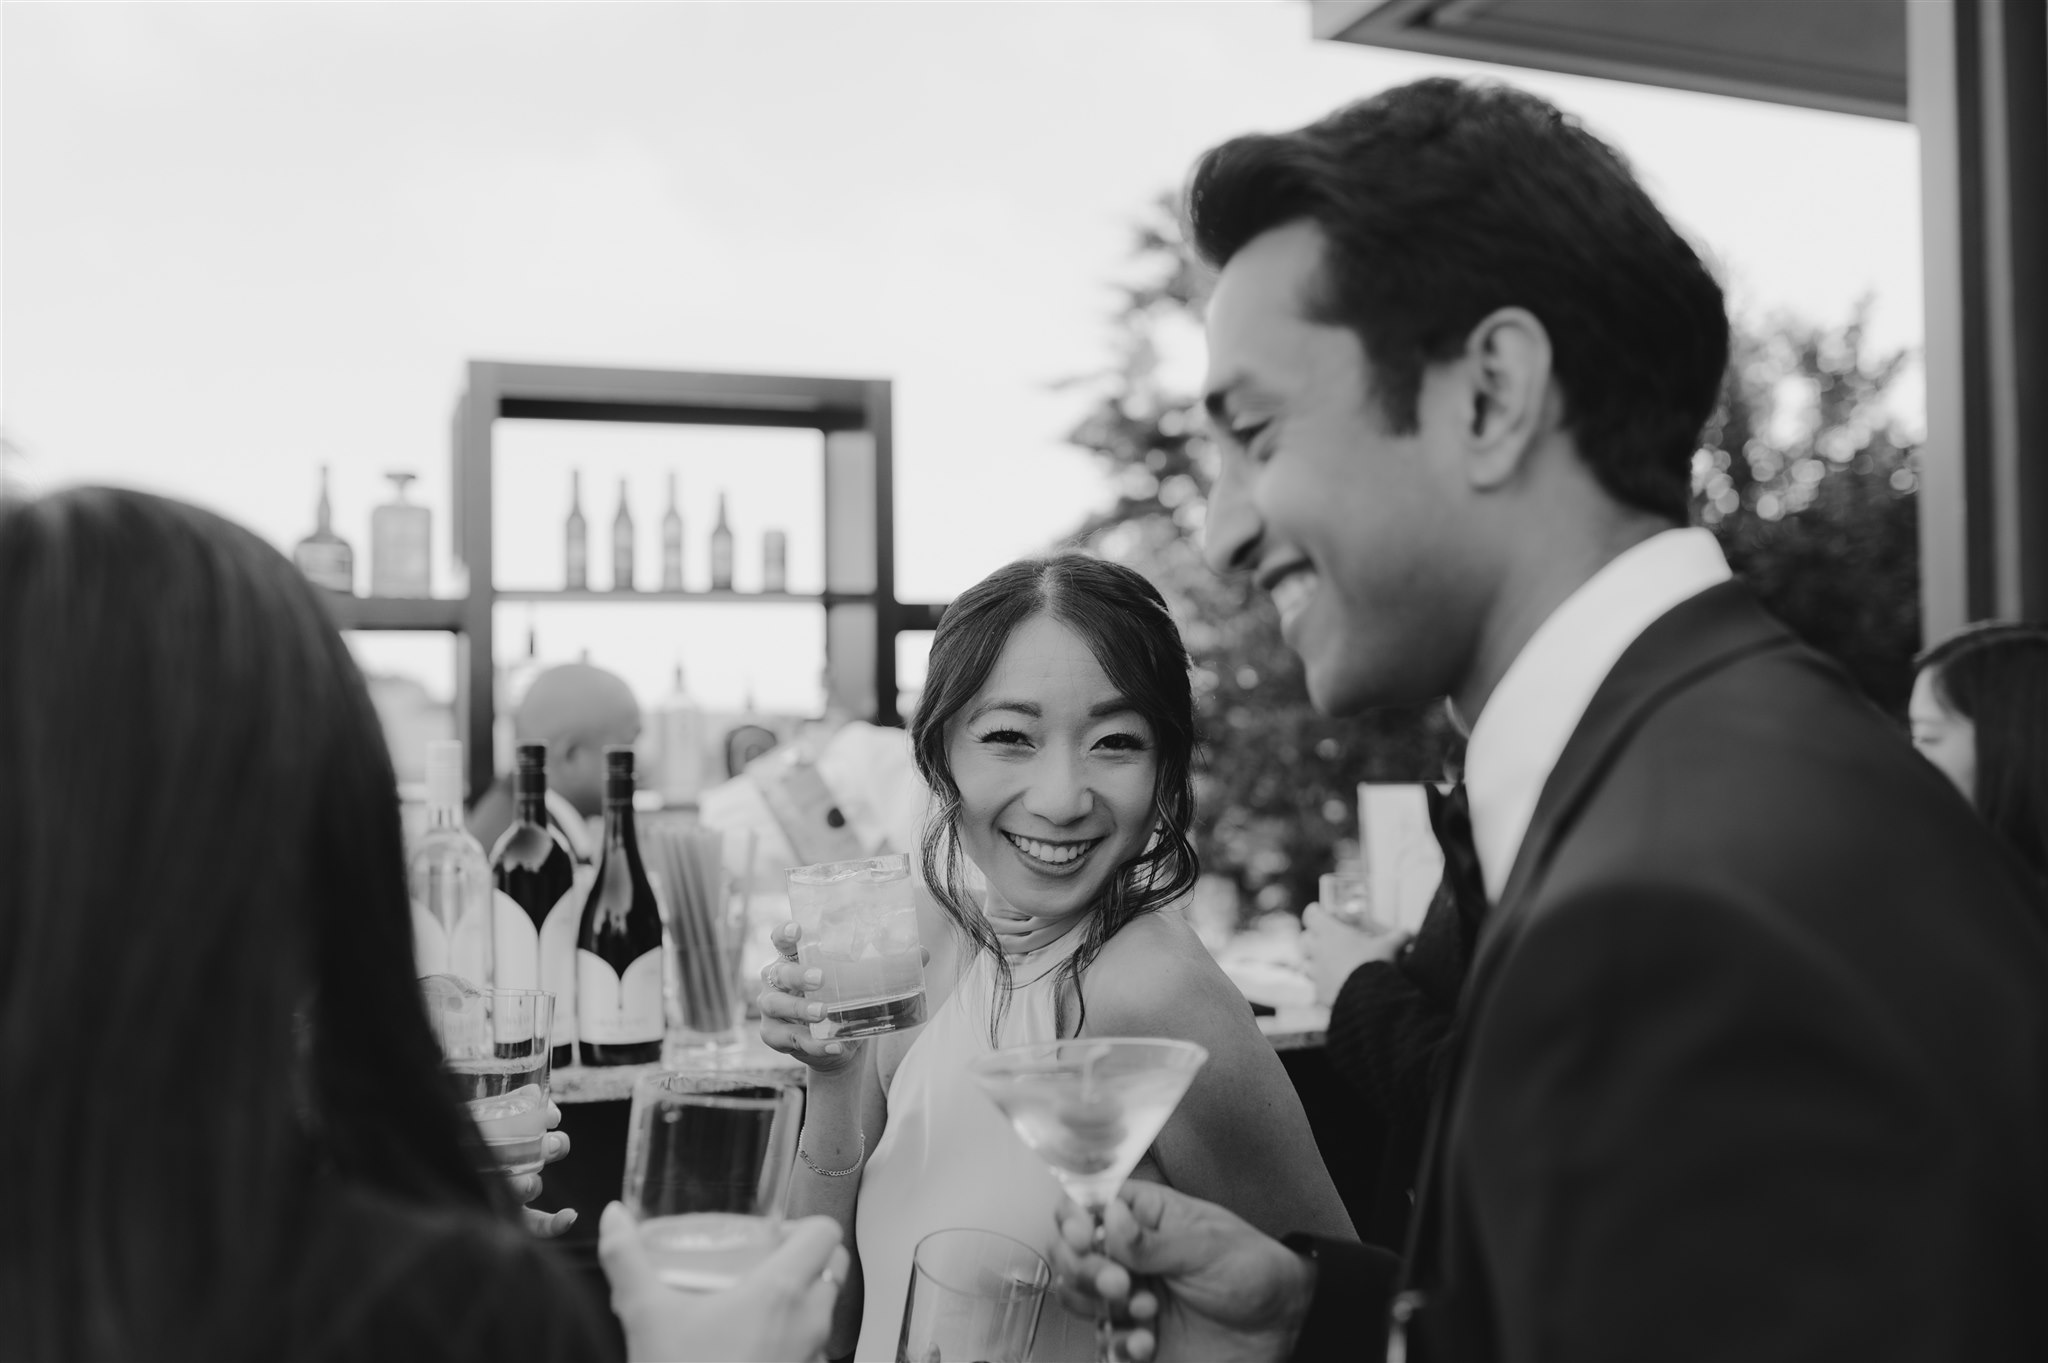 black and white wedding portrait wedding guest cocktail hour candid smiling open bar outdoor garden summer wedding